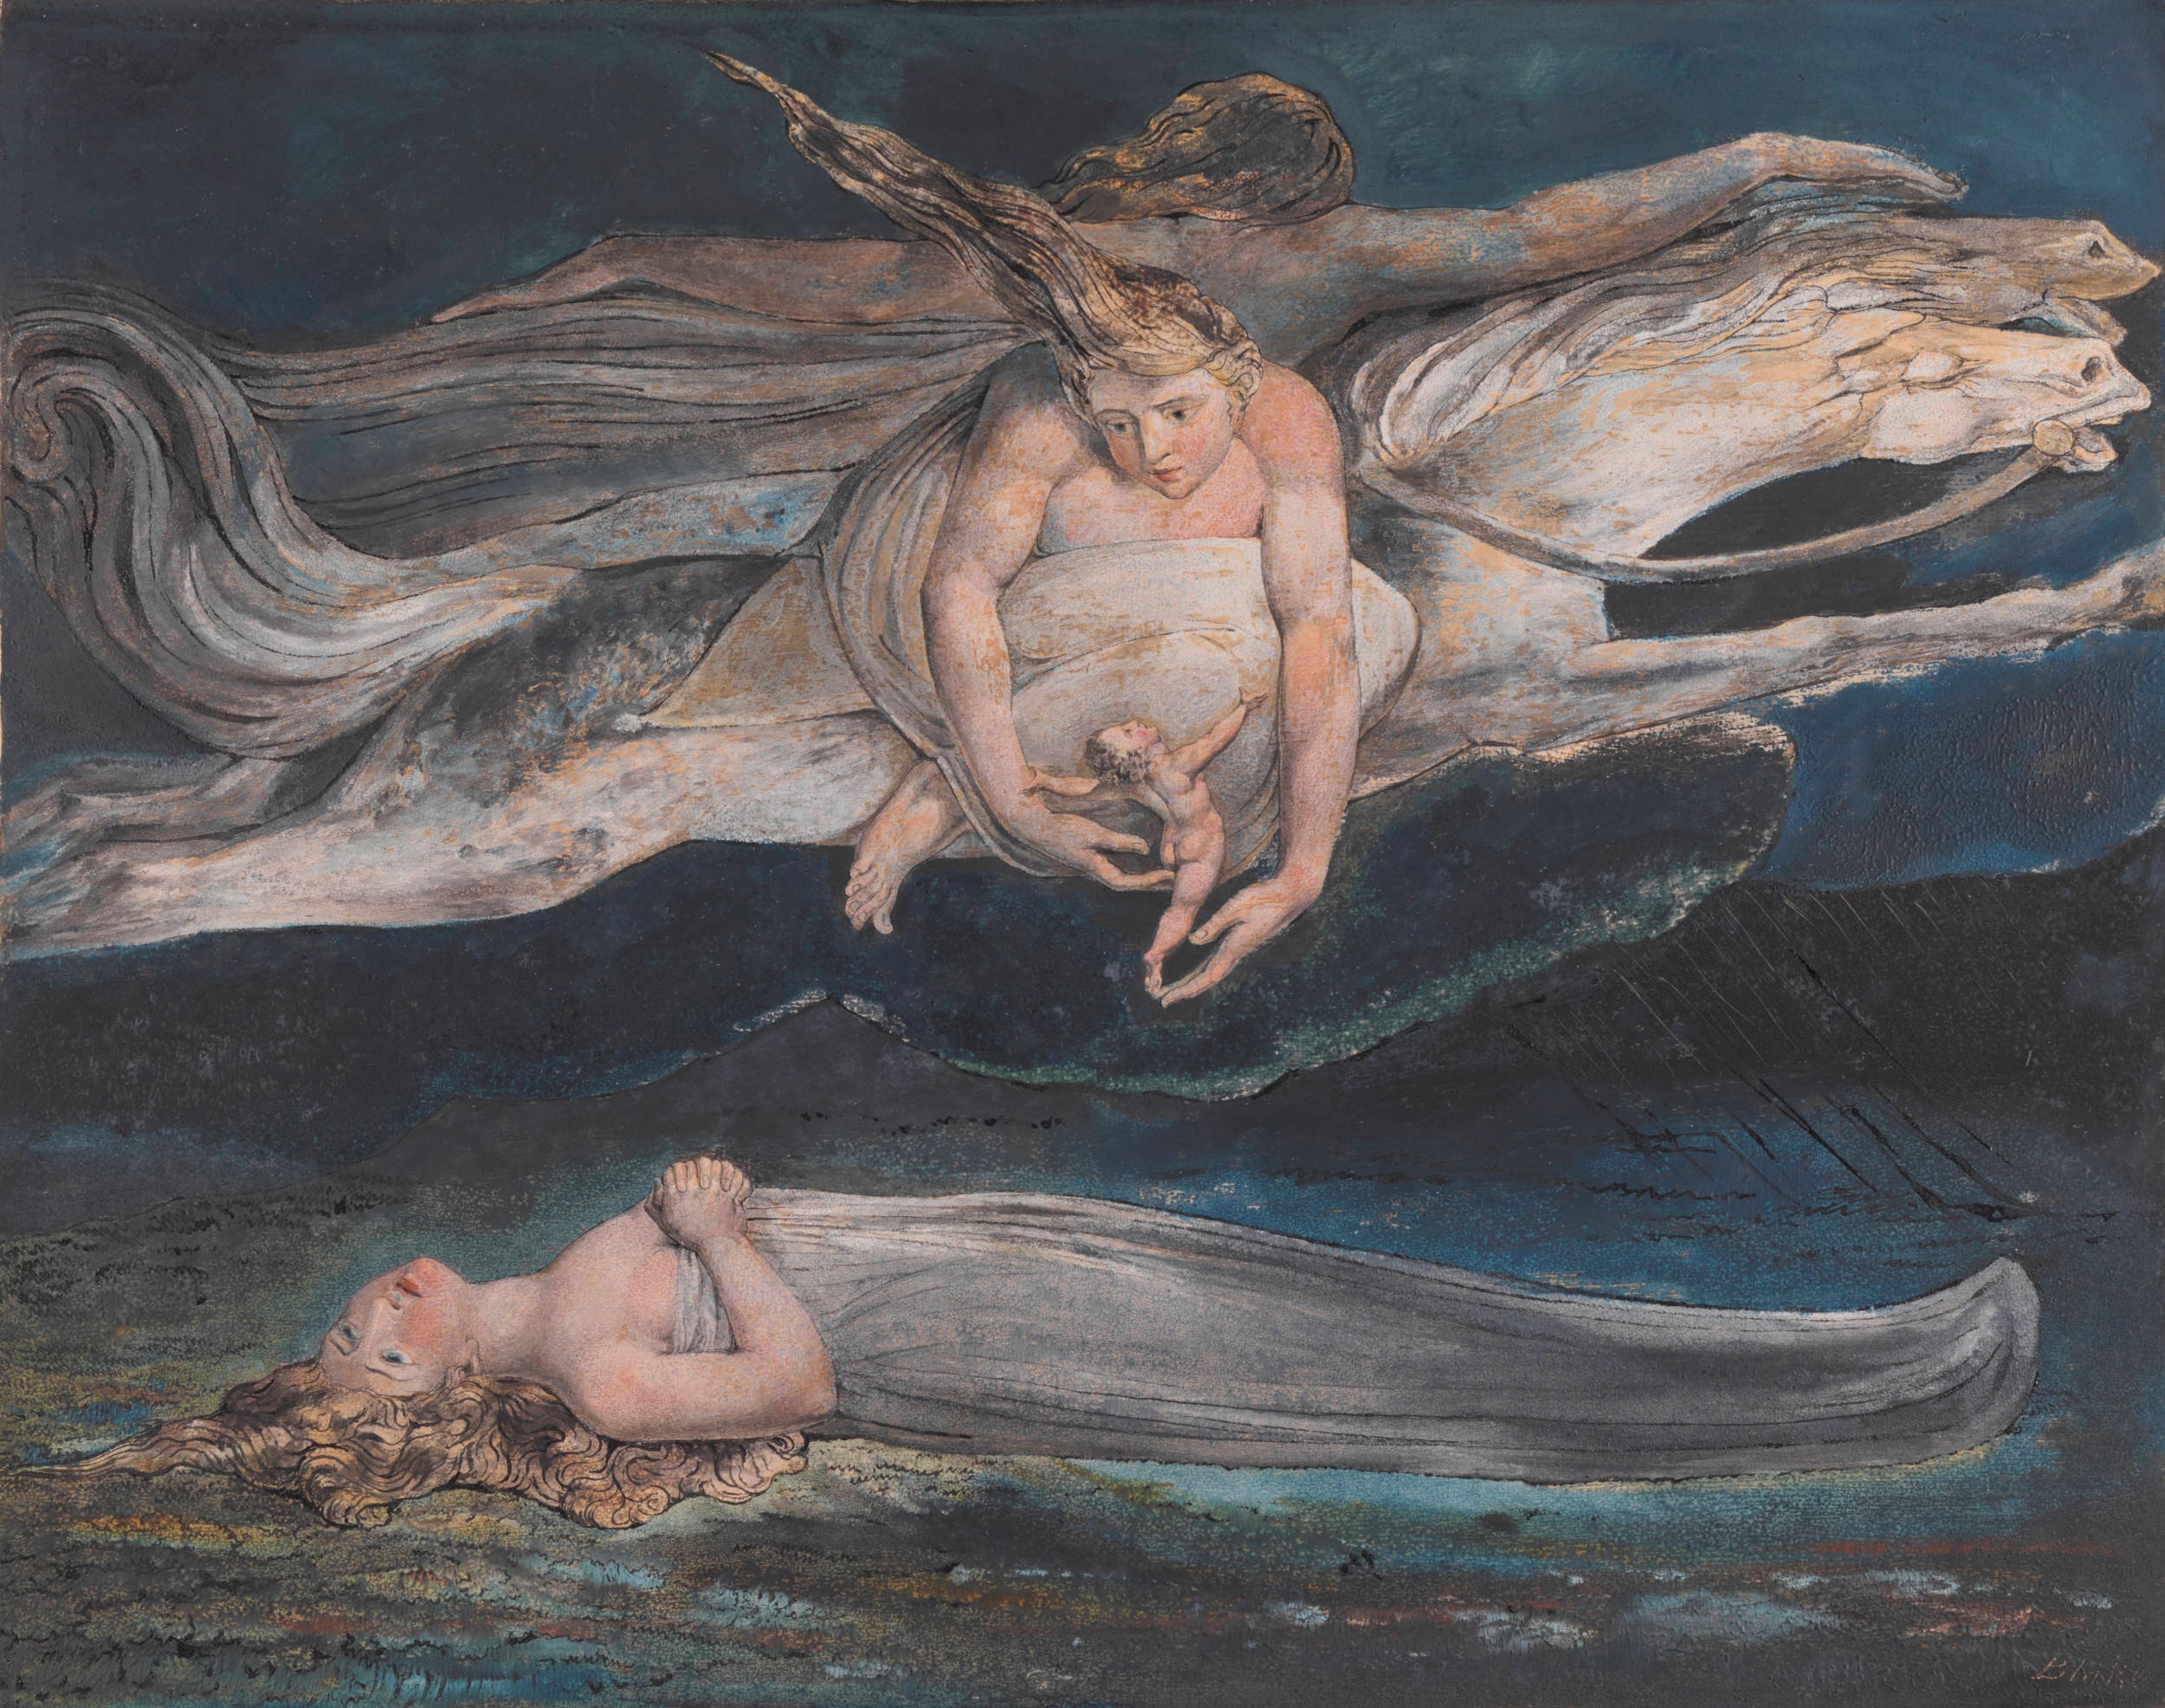 William Blake, Pity (Tate)